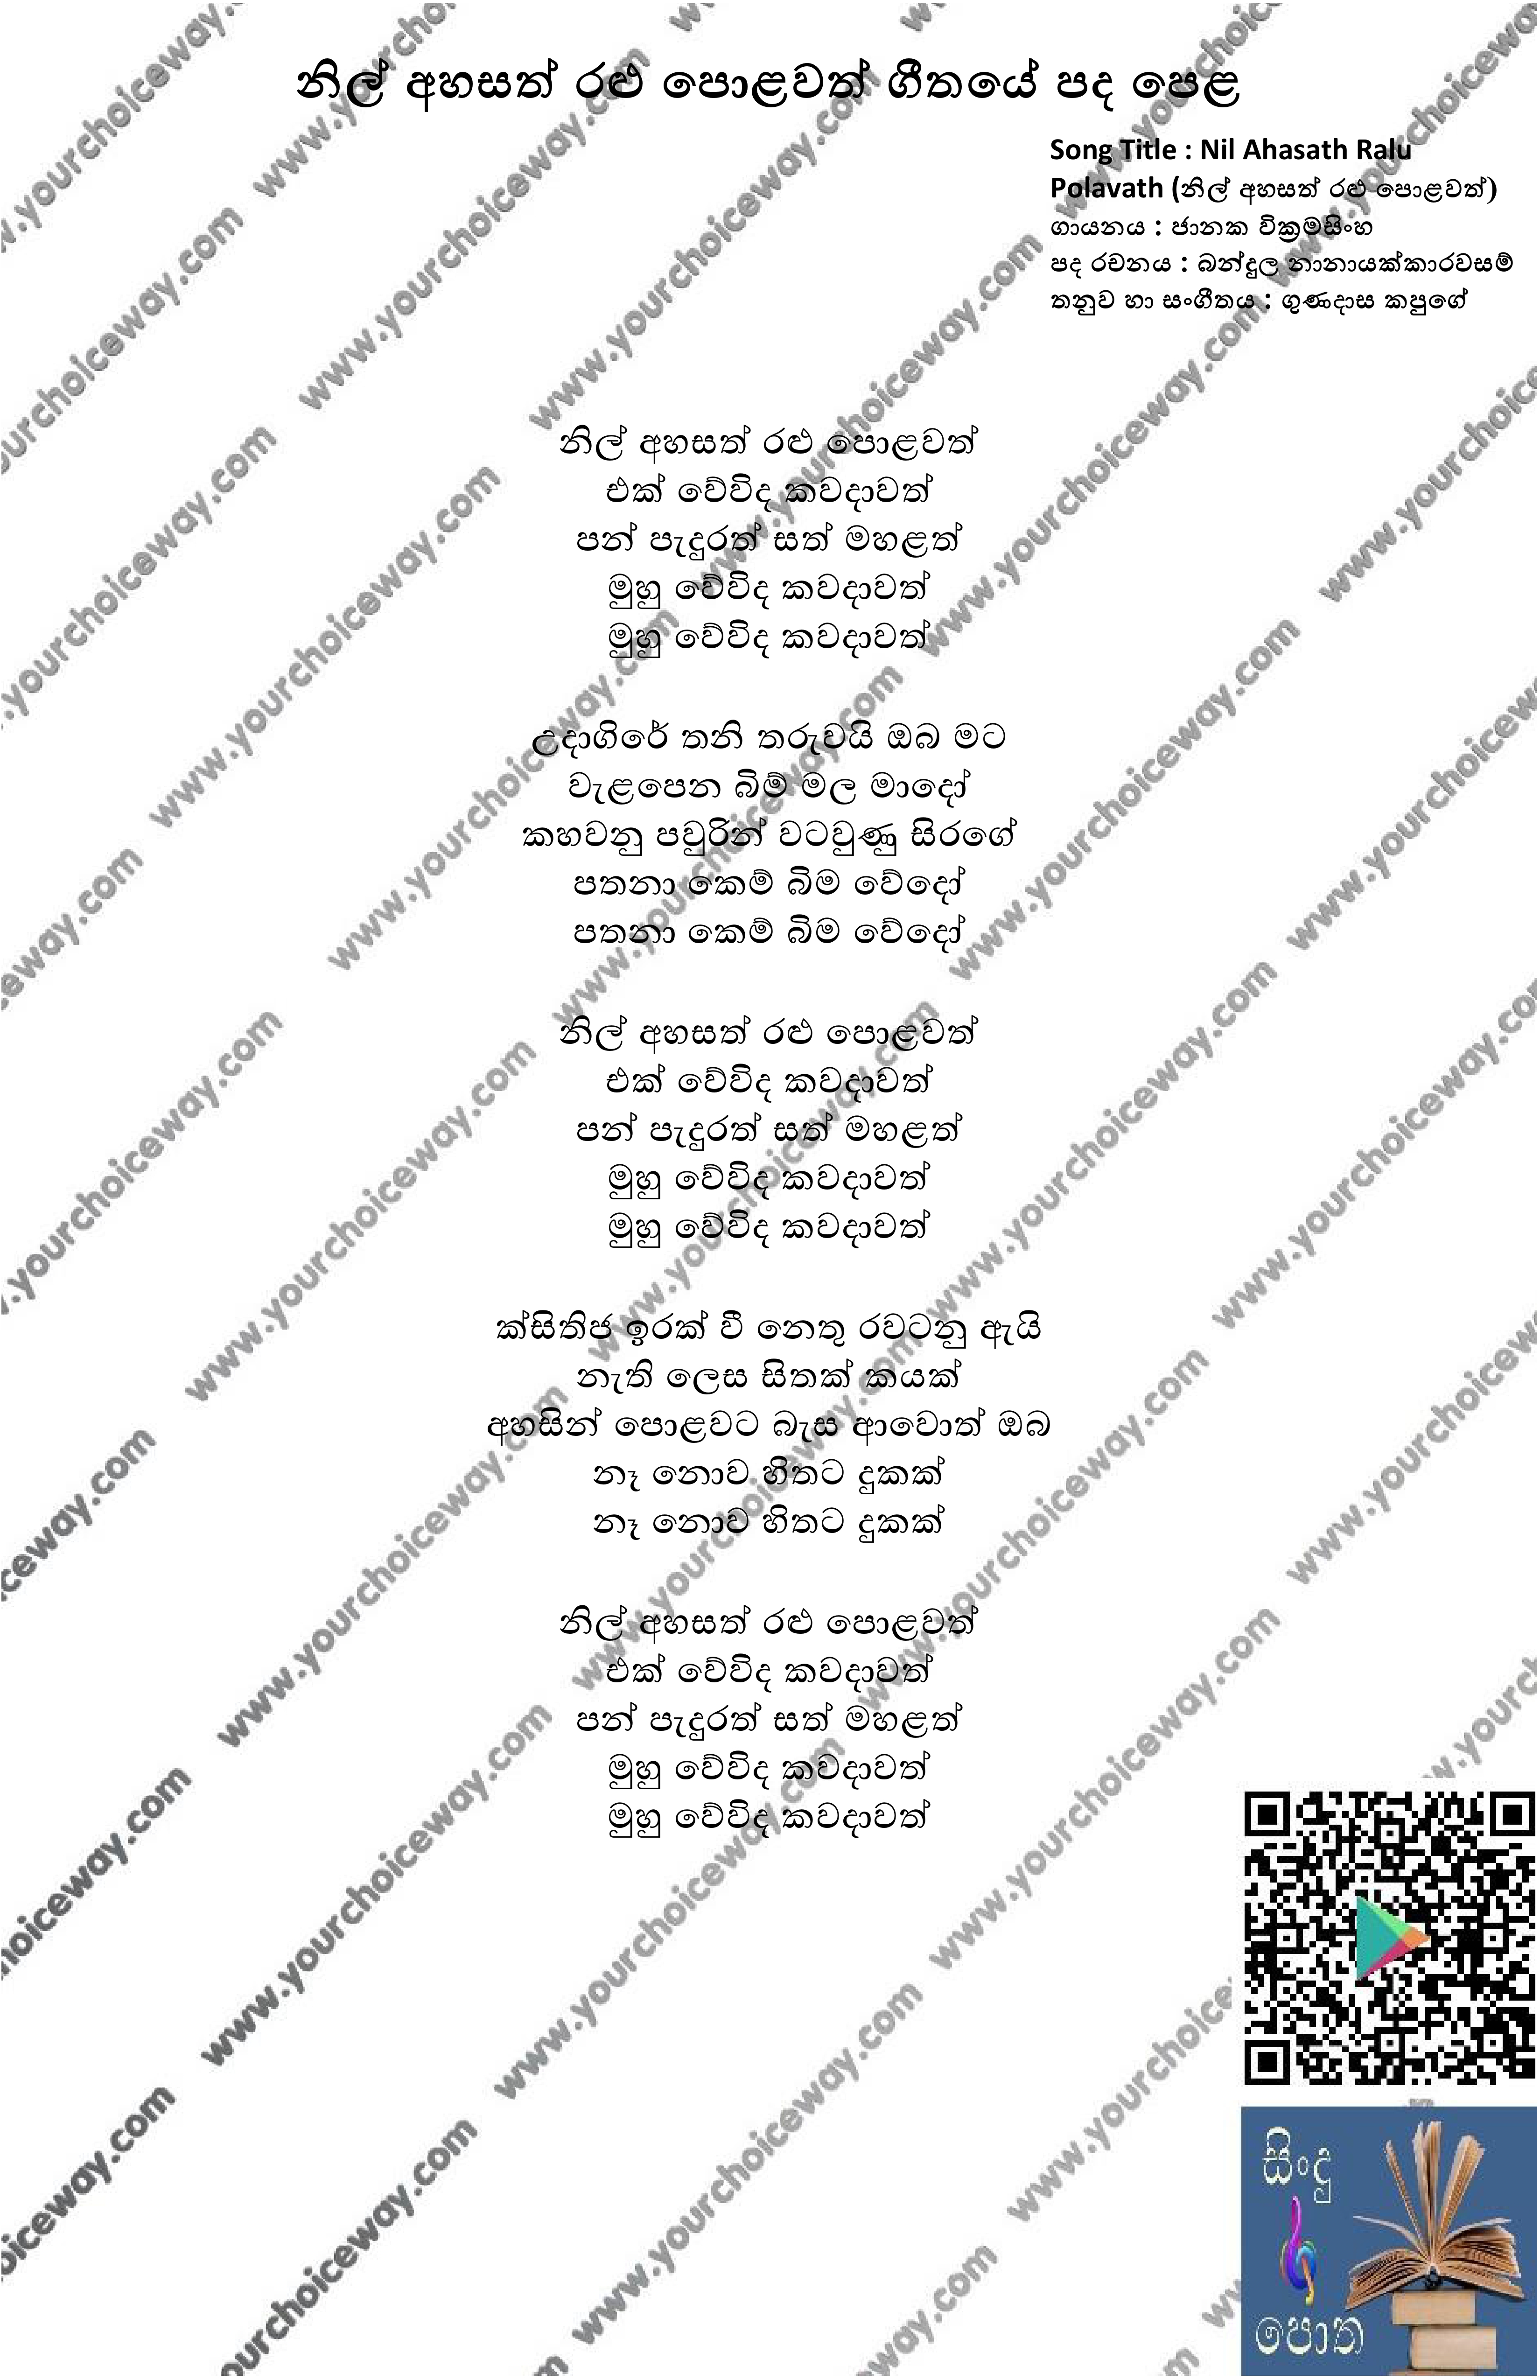 Nil Ahasath Ralu Polavath Song Lyrics - නිල් අහසත් රළු පොළවත් ගීතයේ පද පෙළ